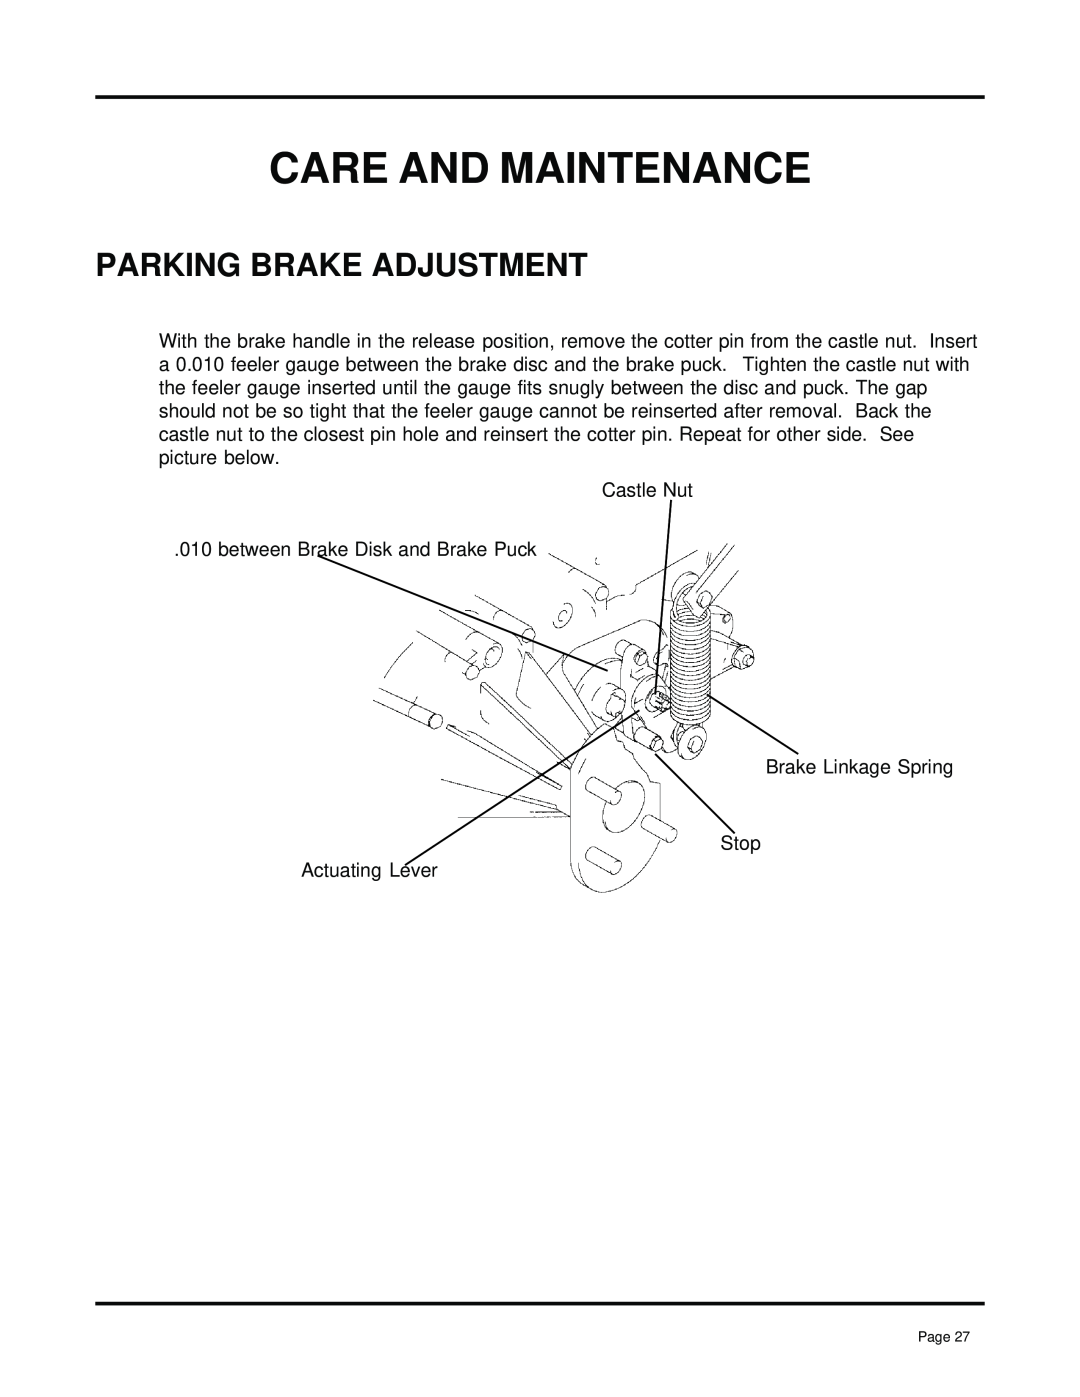 Dixon 13091-0500, ZTR 7025 manual Parking Brake Adjustment, Care And Maintenance 